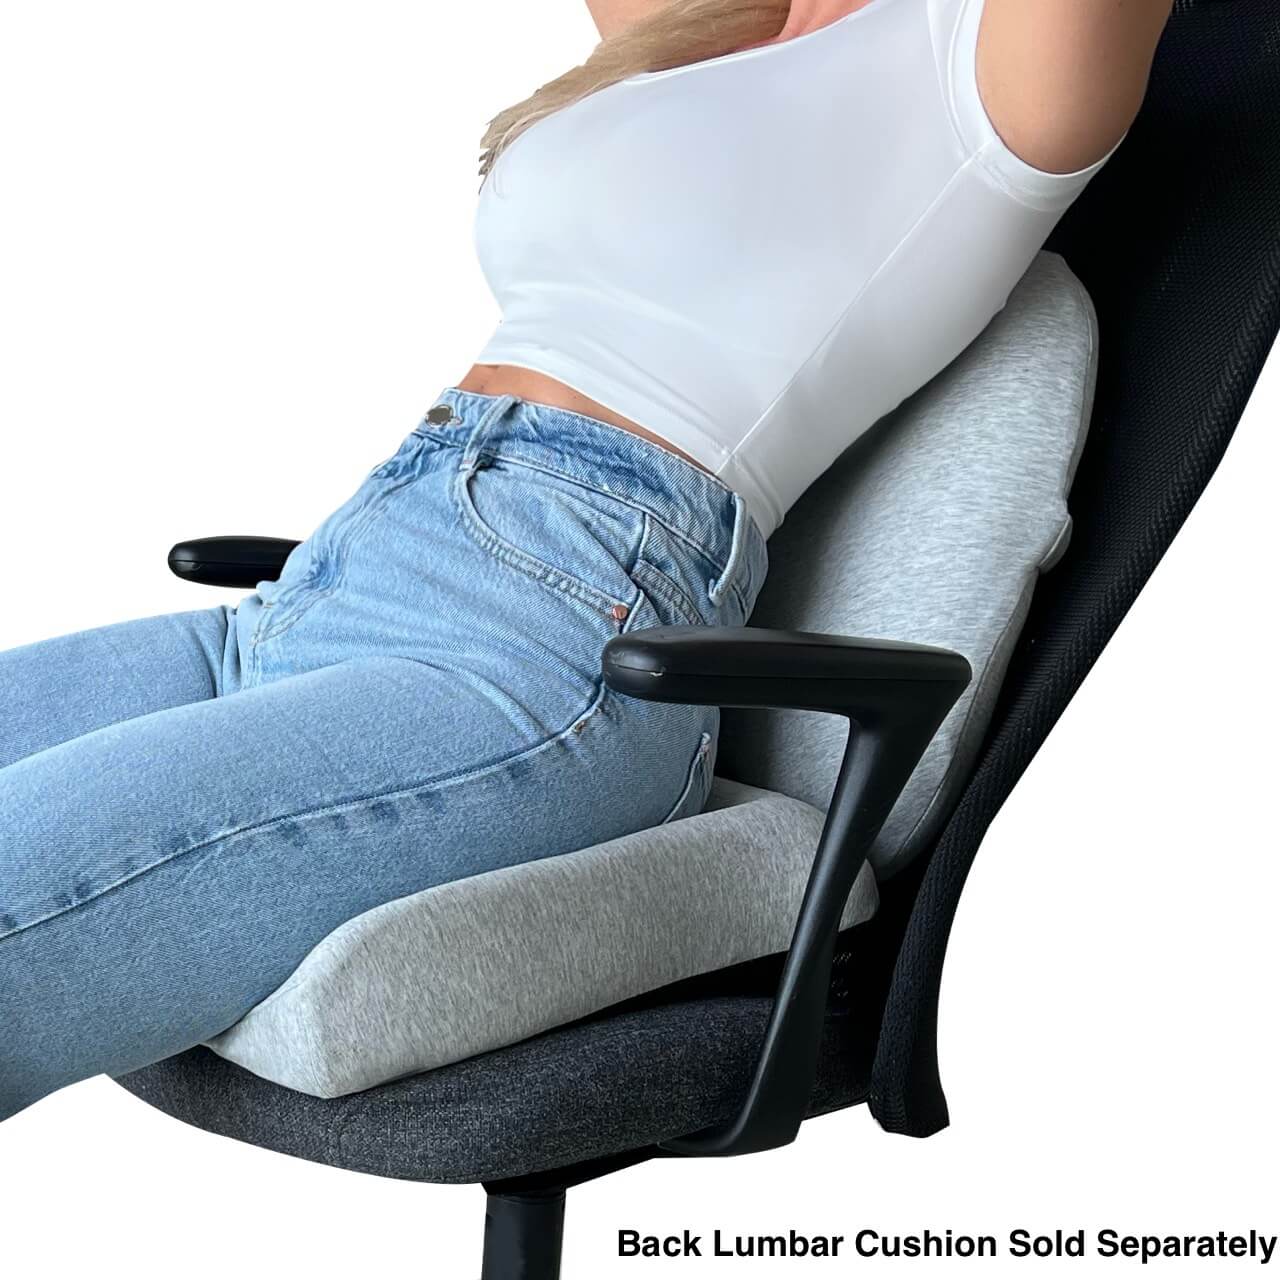 Best Seat Cushion for Sciatica- Top Sciatic Seat Cushions Ireland